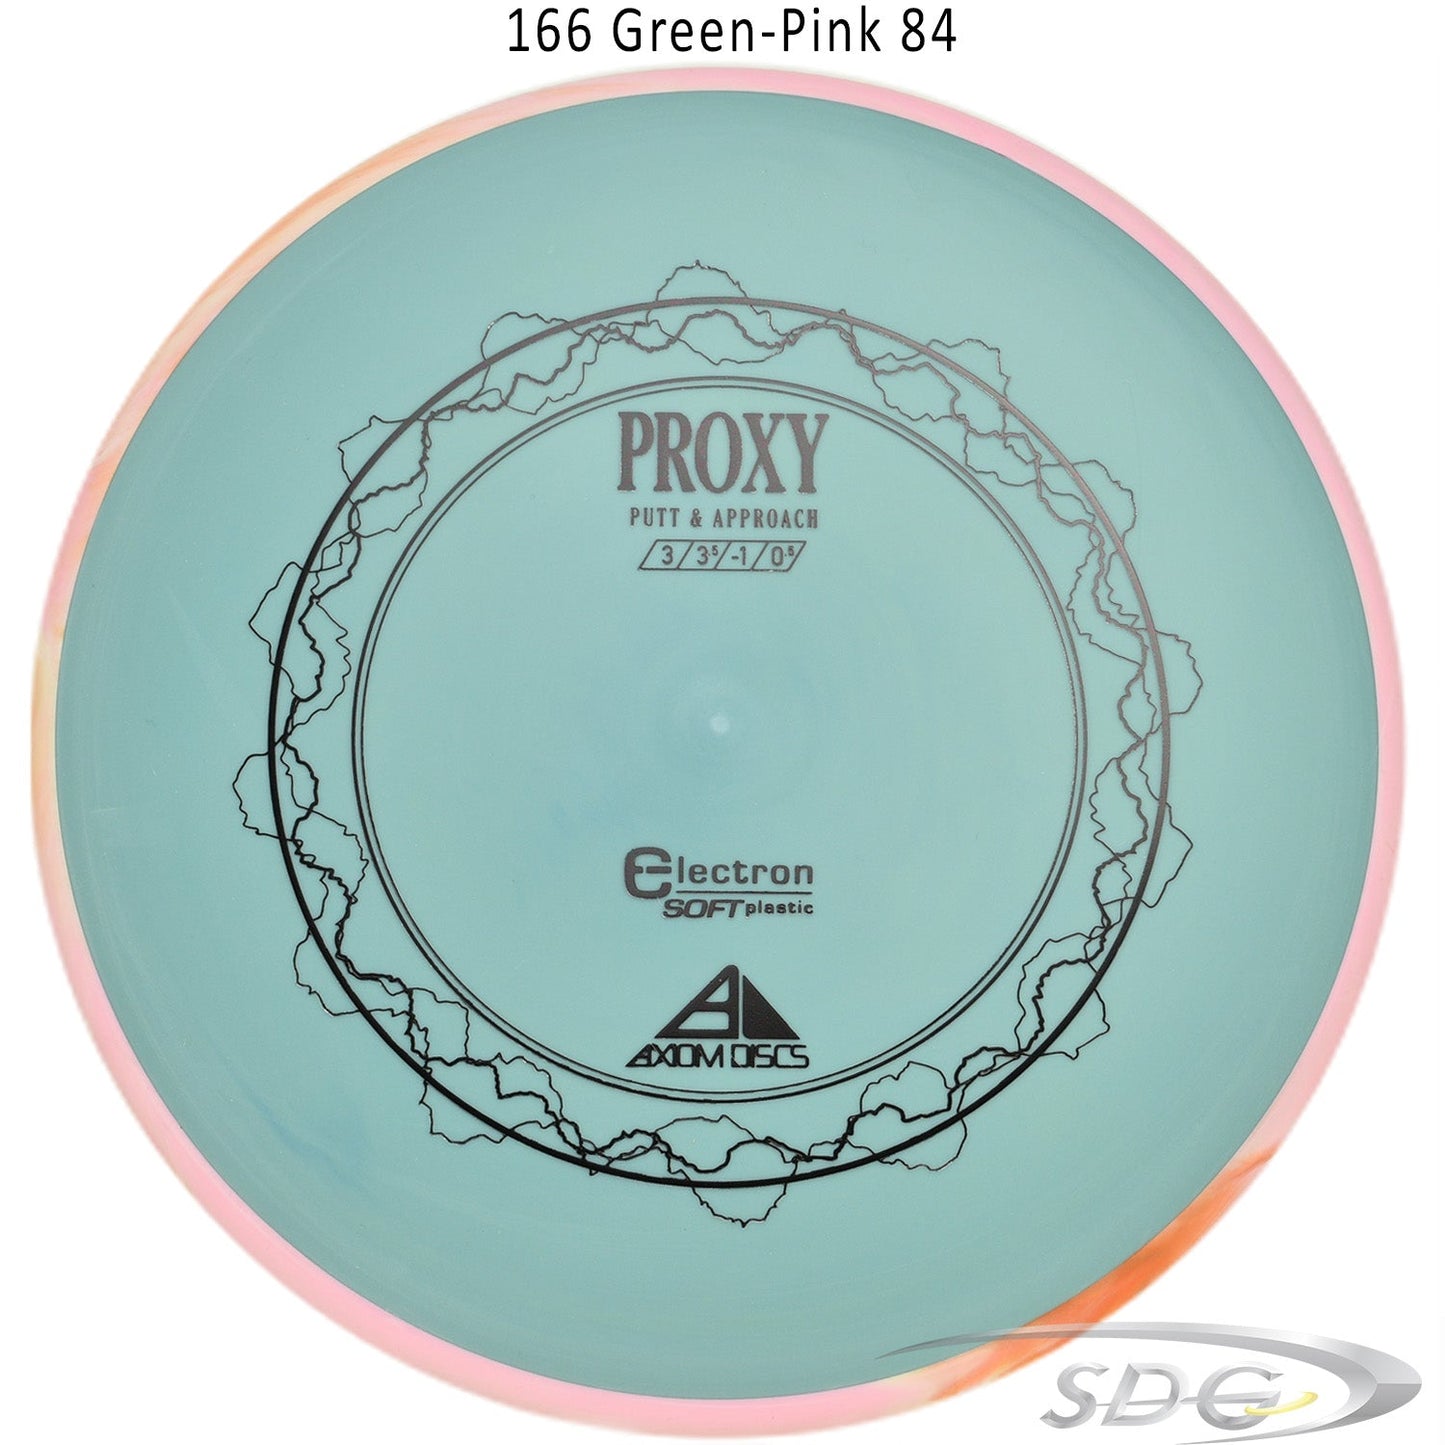 axiom-electron-proxy-soft-disc-golf-putt-approach 166 Green-Pink 84 